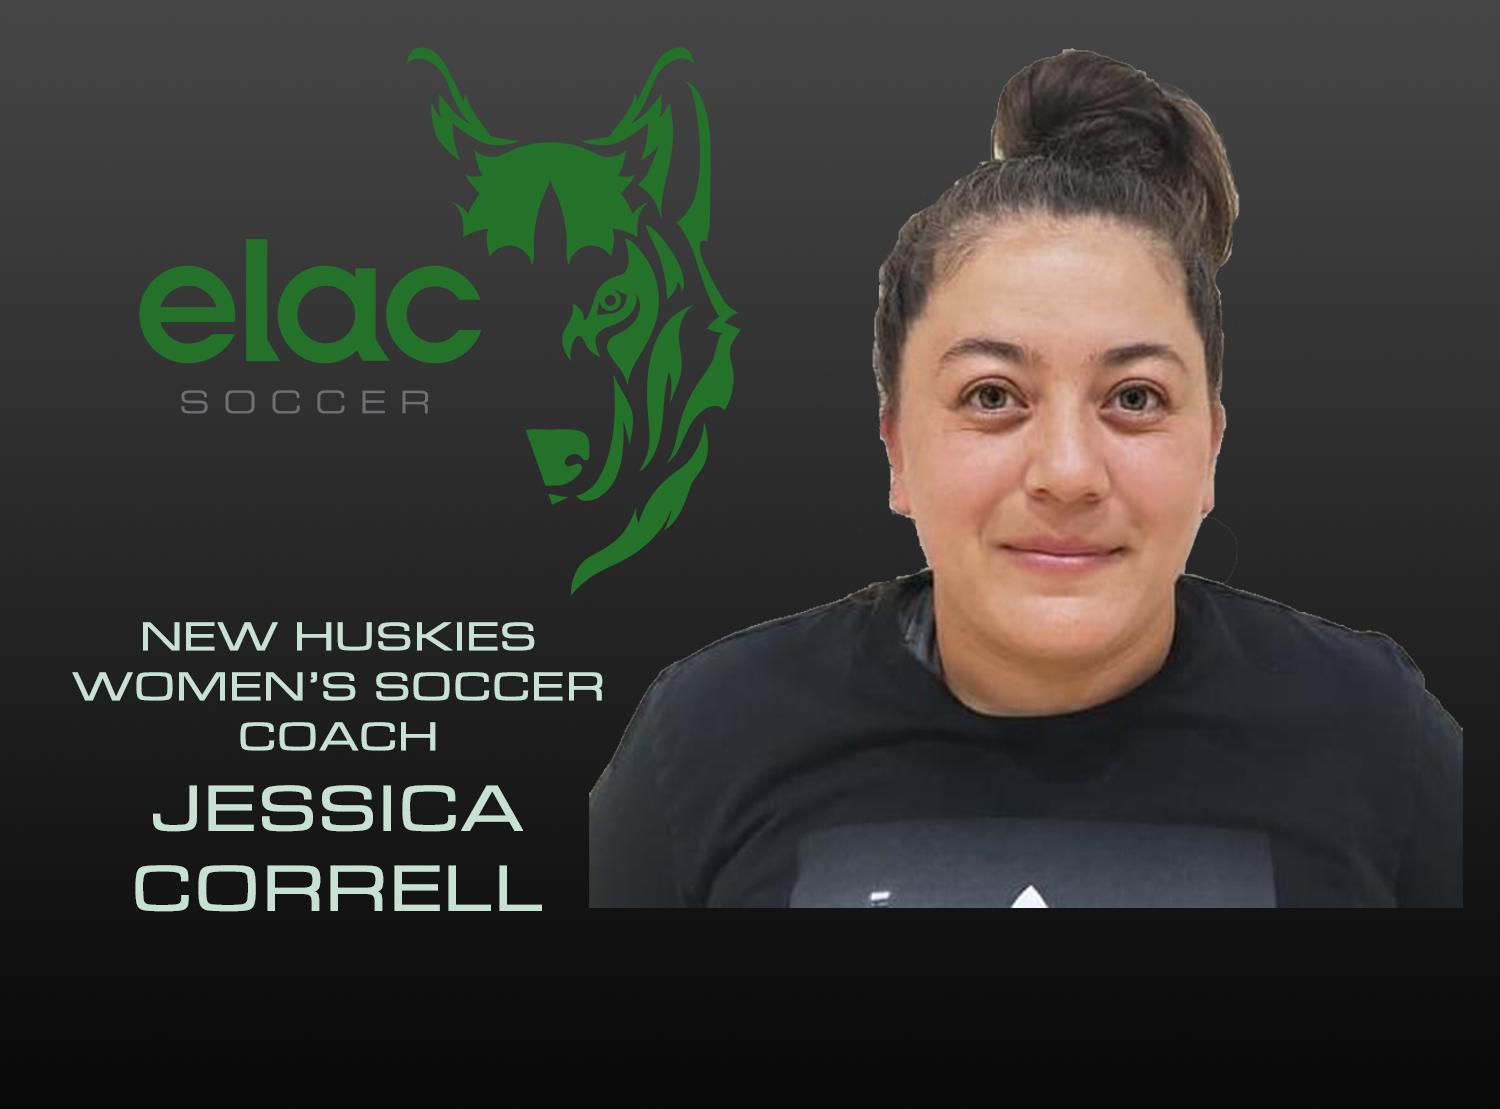 Jessica Correll Named New Women's Soccer Coach